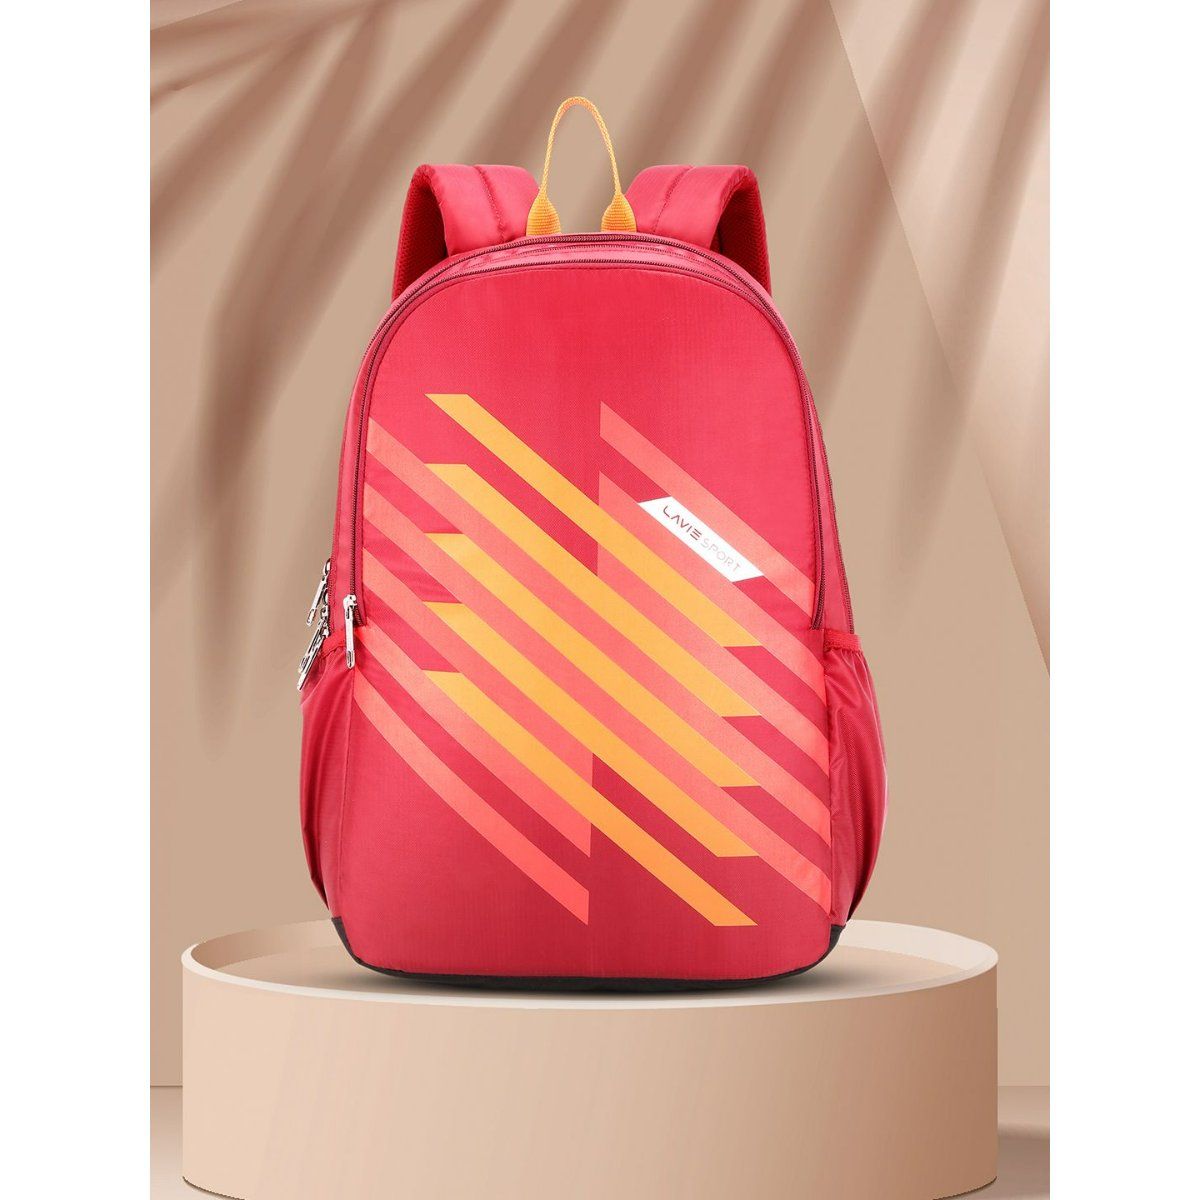 ap ulike Women Trendy Combo Backpack Handbag Shoulder Bag College Bag 15 L  Backpack Pink  Price in India  Flipkartcom